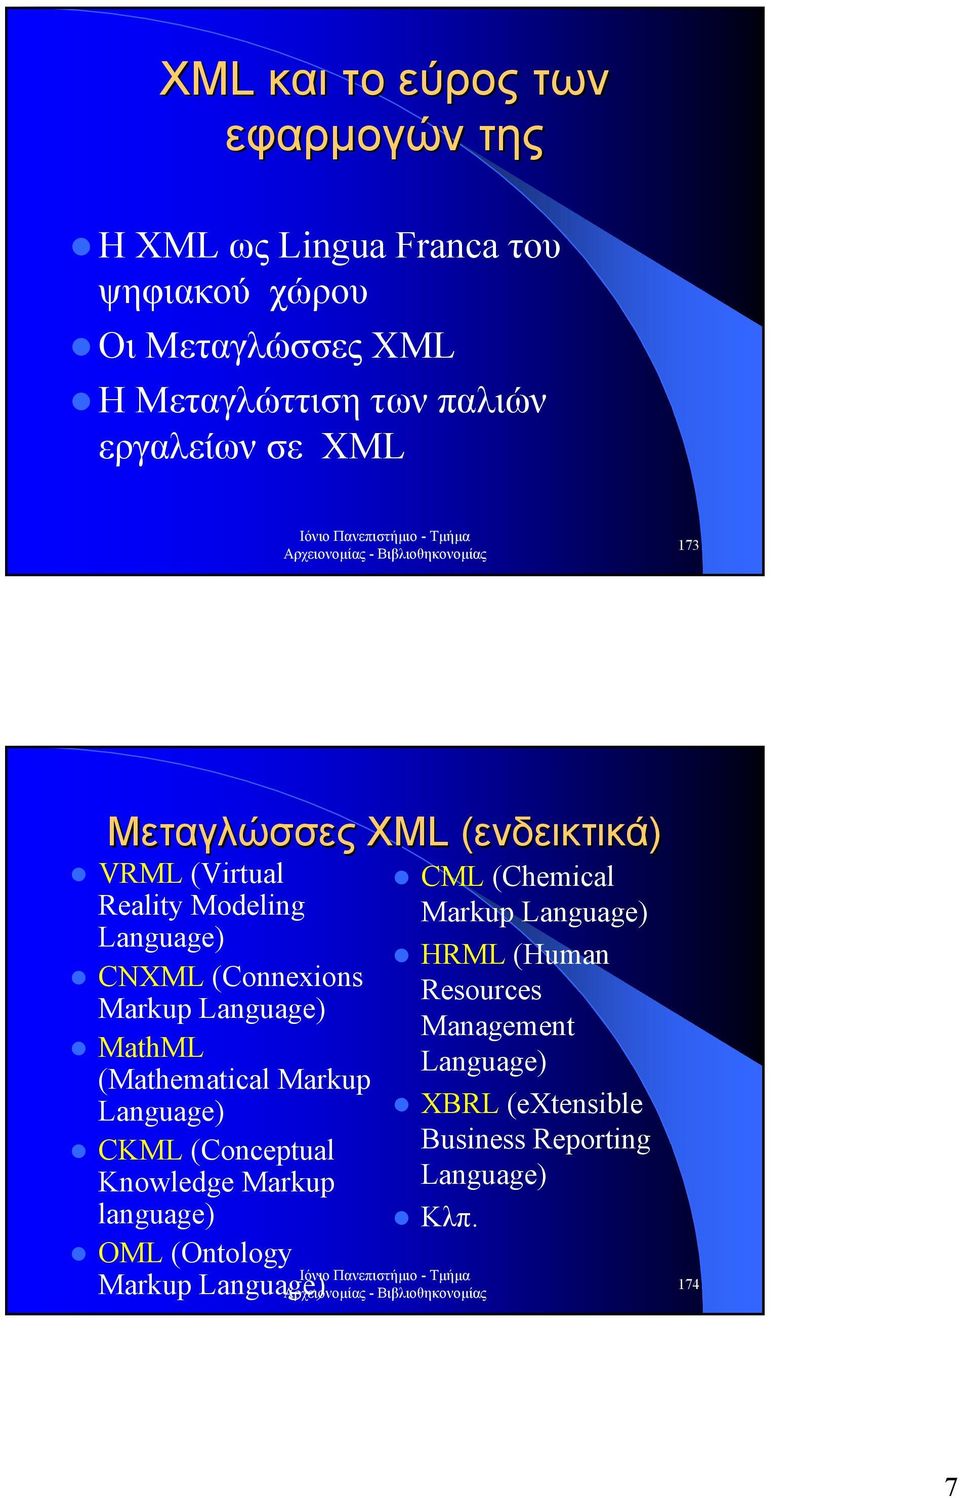 Language) MathML (Mathematical Markup Language) CKML (Conceptual Knowledge Markup language) OML (Ontology Markup Language)